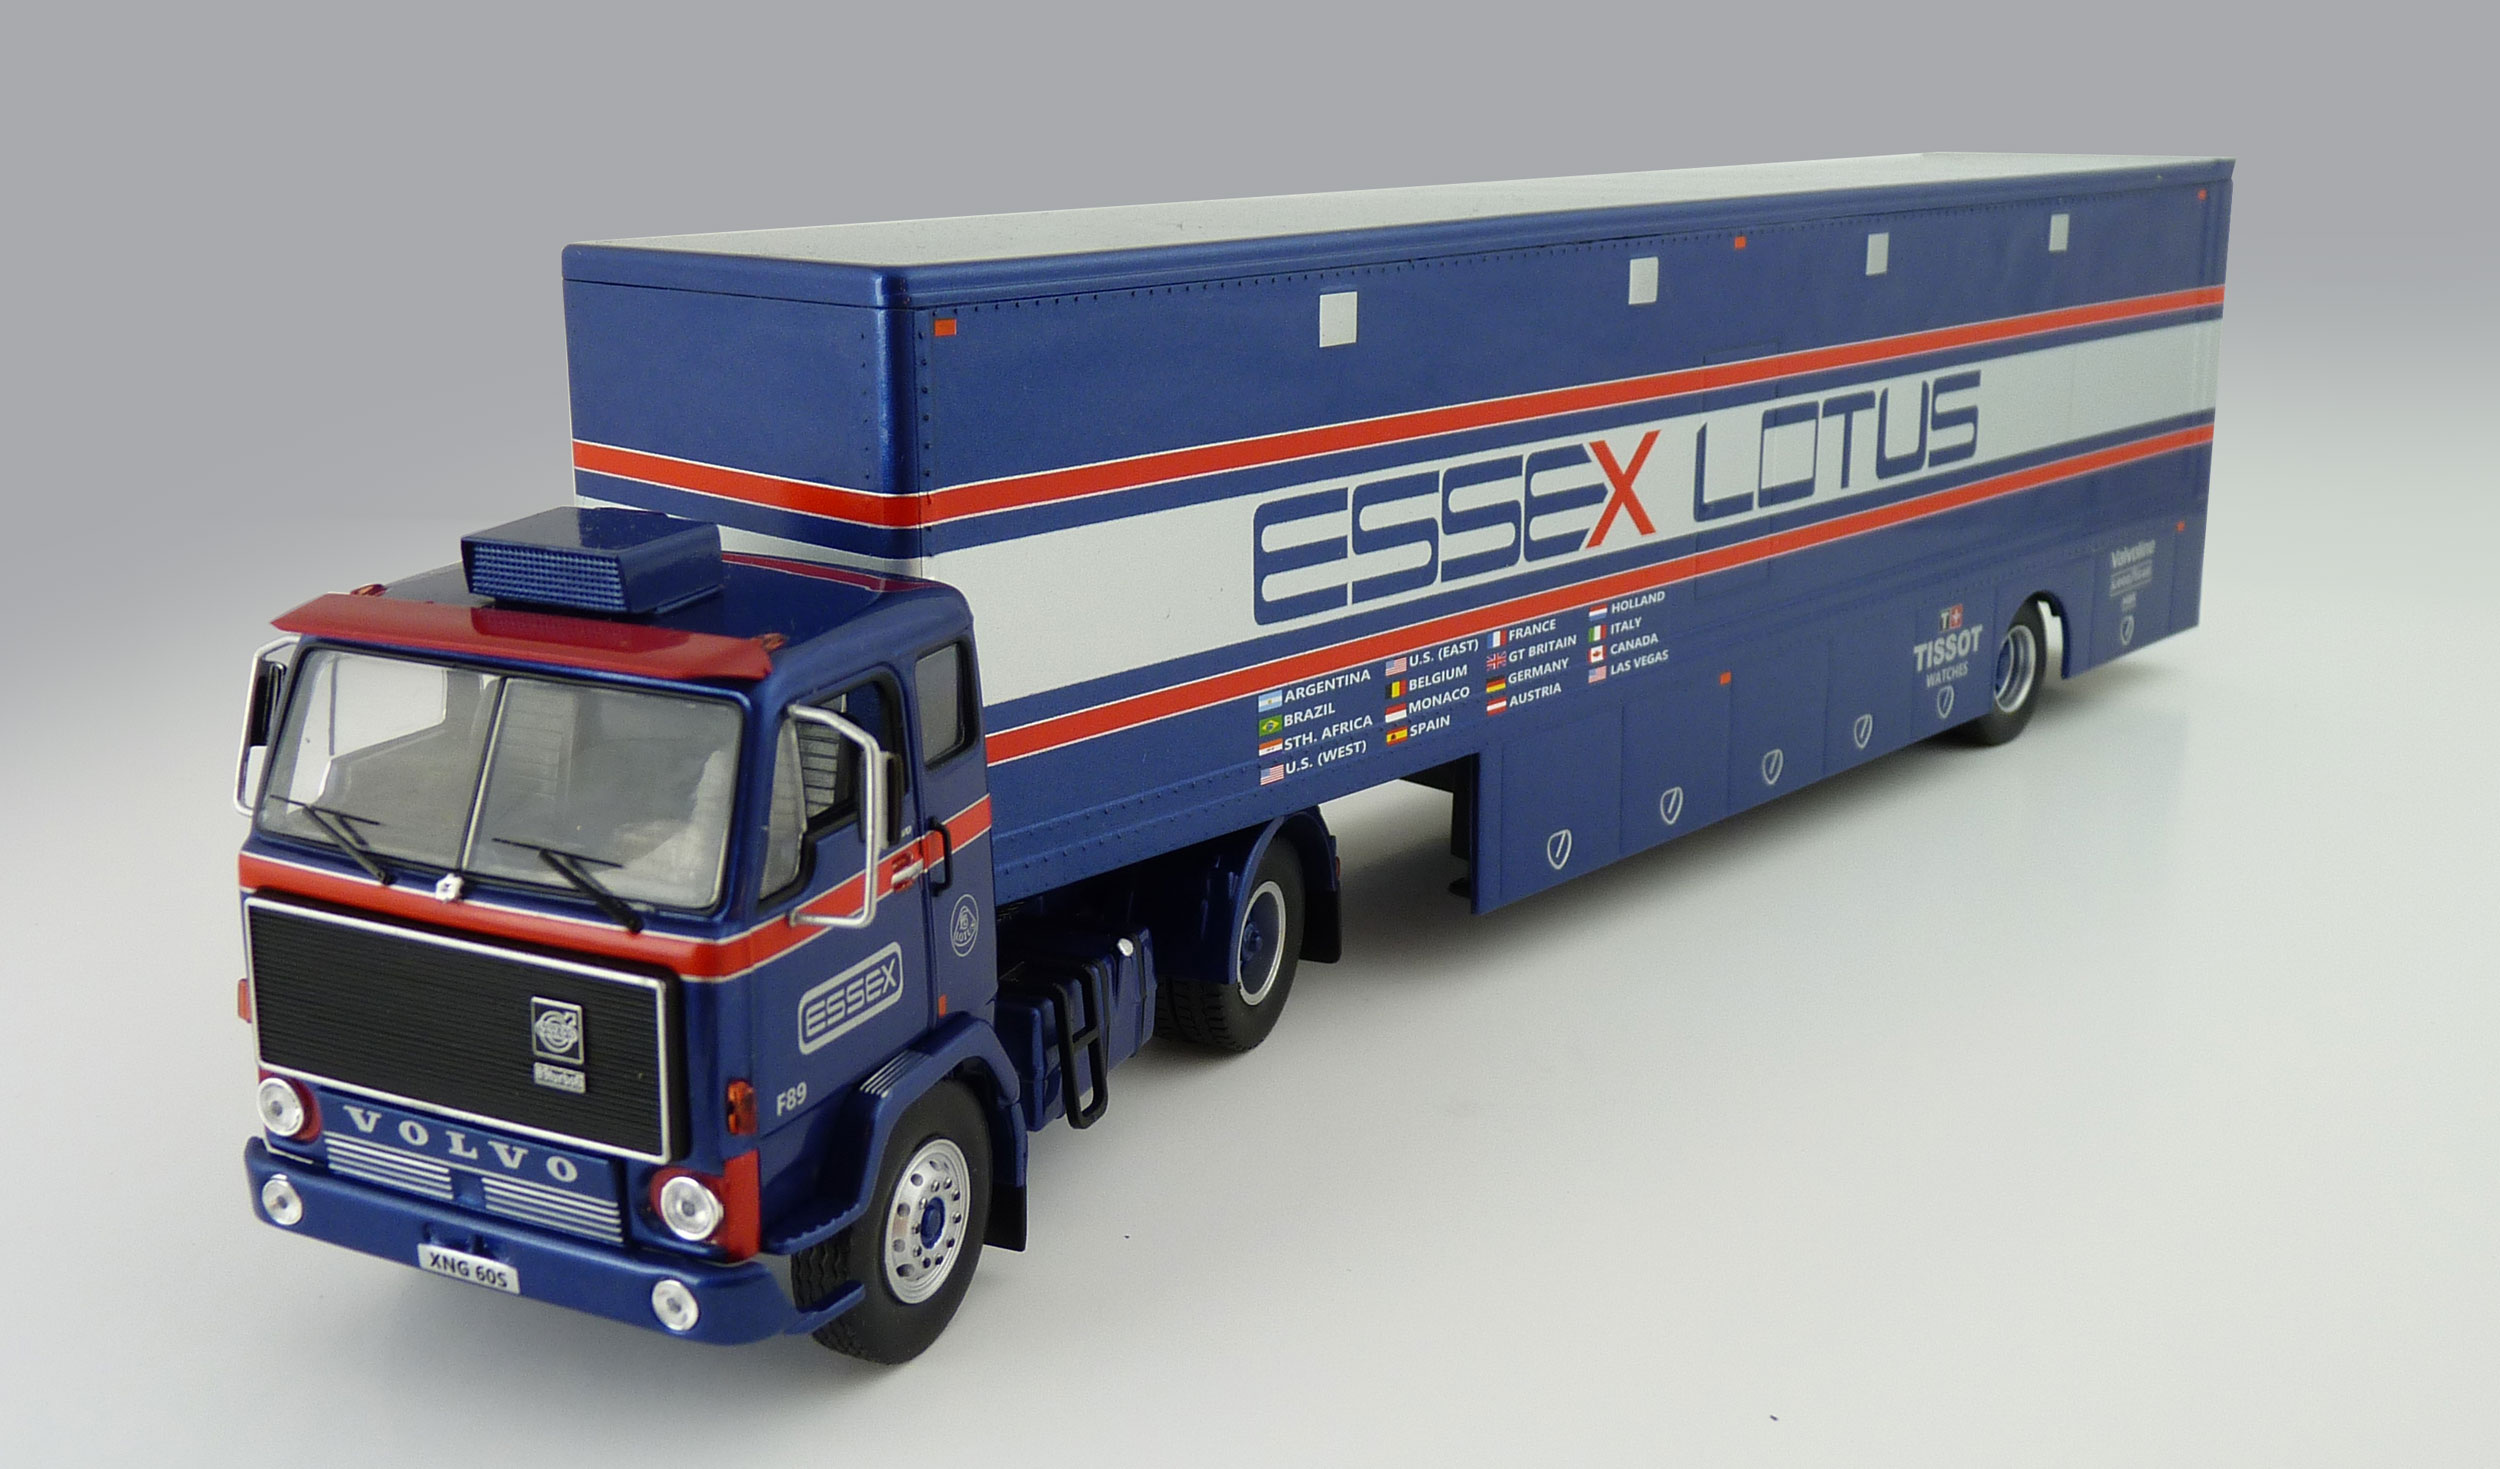 IXO Essex Lotus Transporter Truck